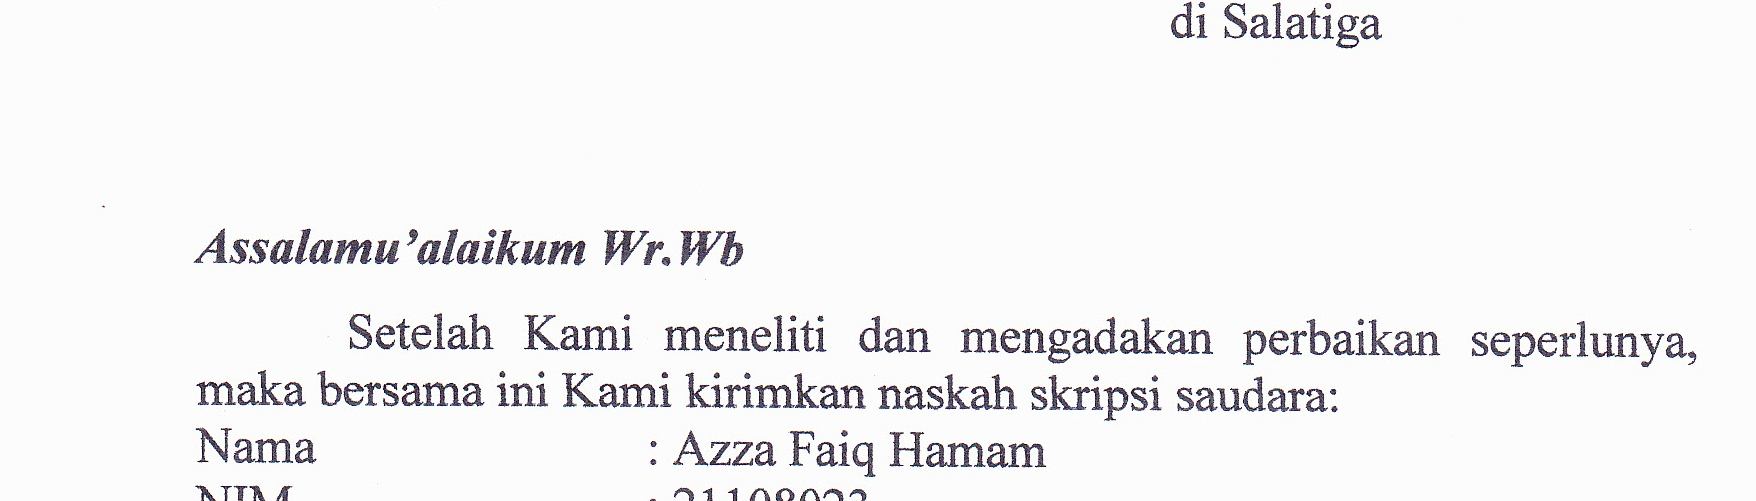 Skripsi Saudara Azza Faiq Hamam Kepada Yth, Ketua STAIN Salatiga di Salatiga Assalamu alaikum Wr.